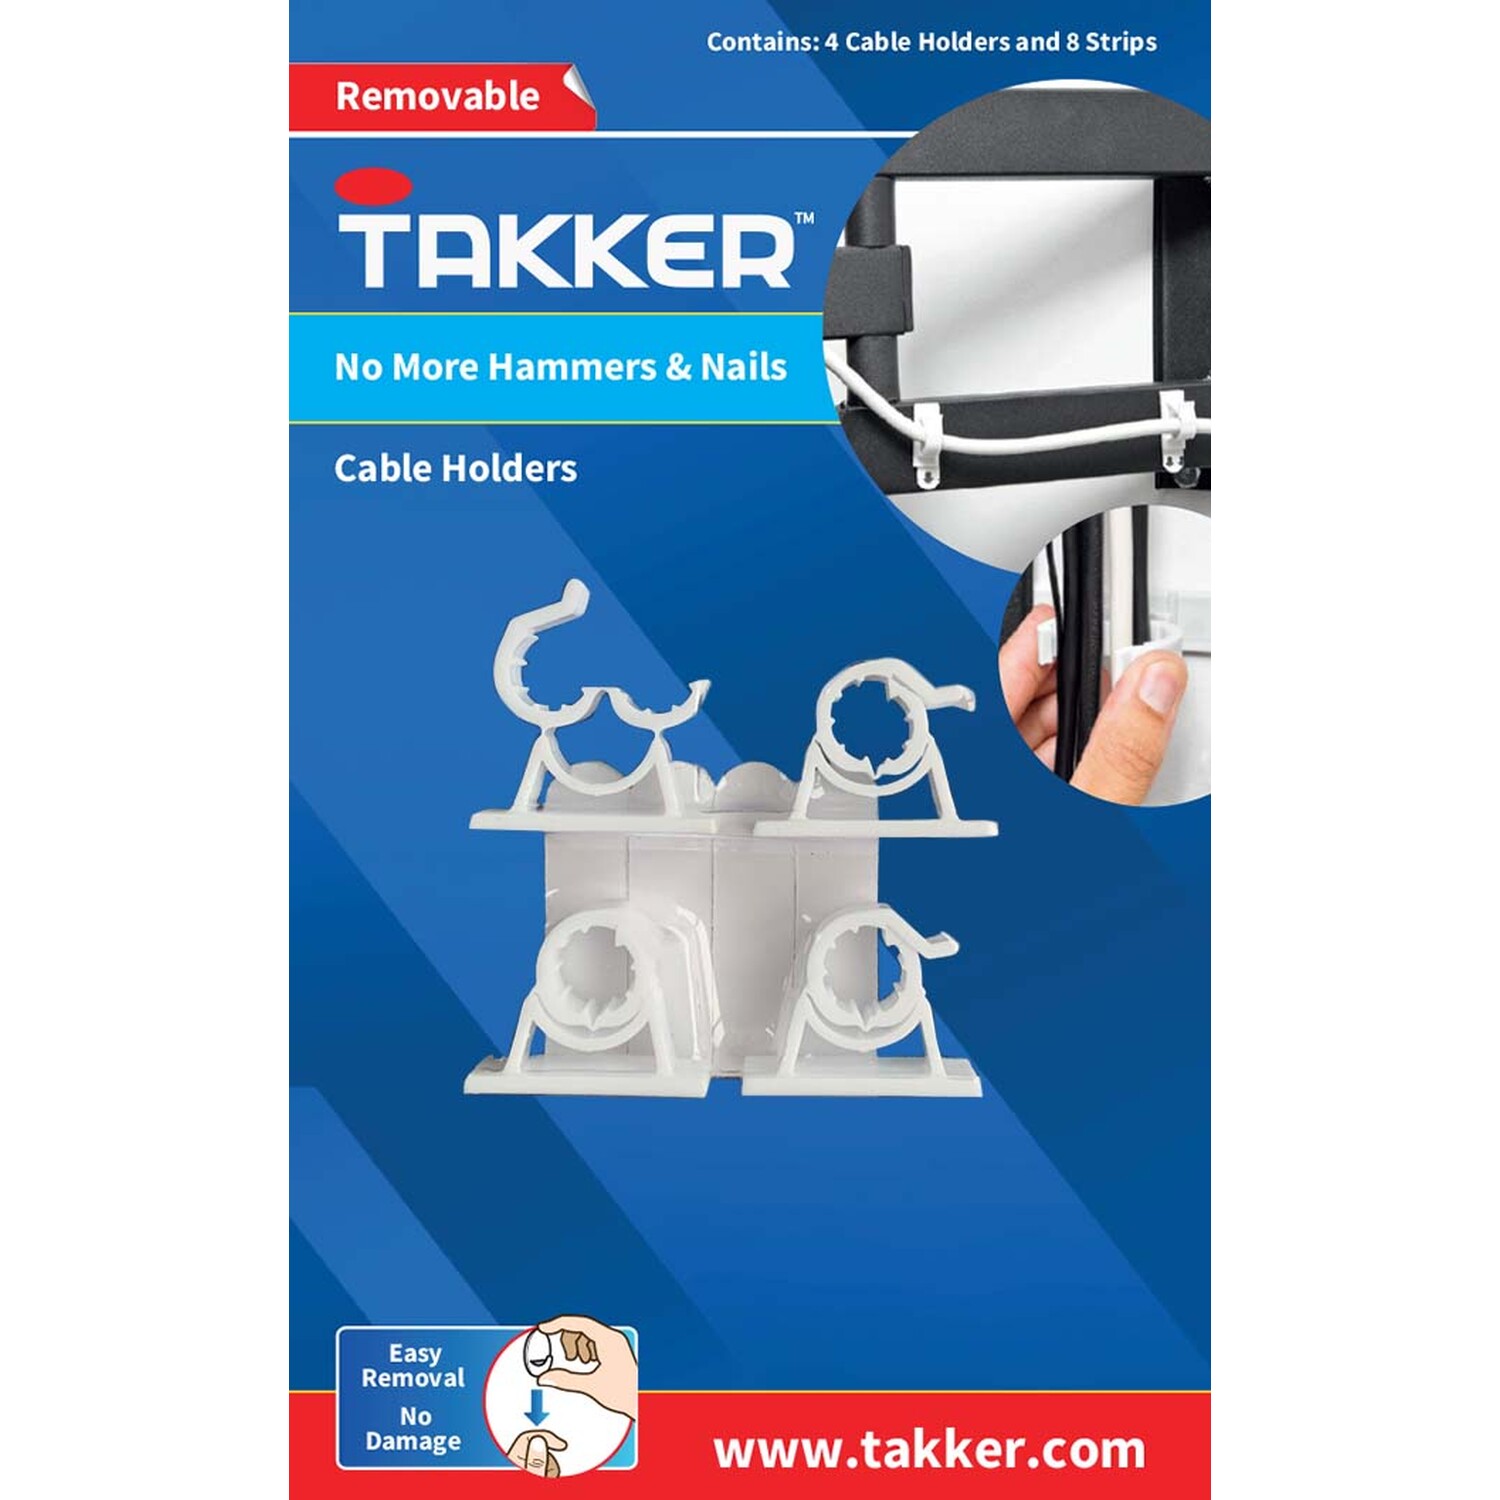 Takker Removable Cable Holders Image 1